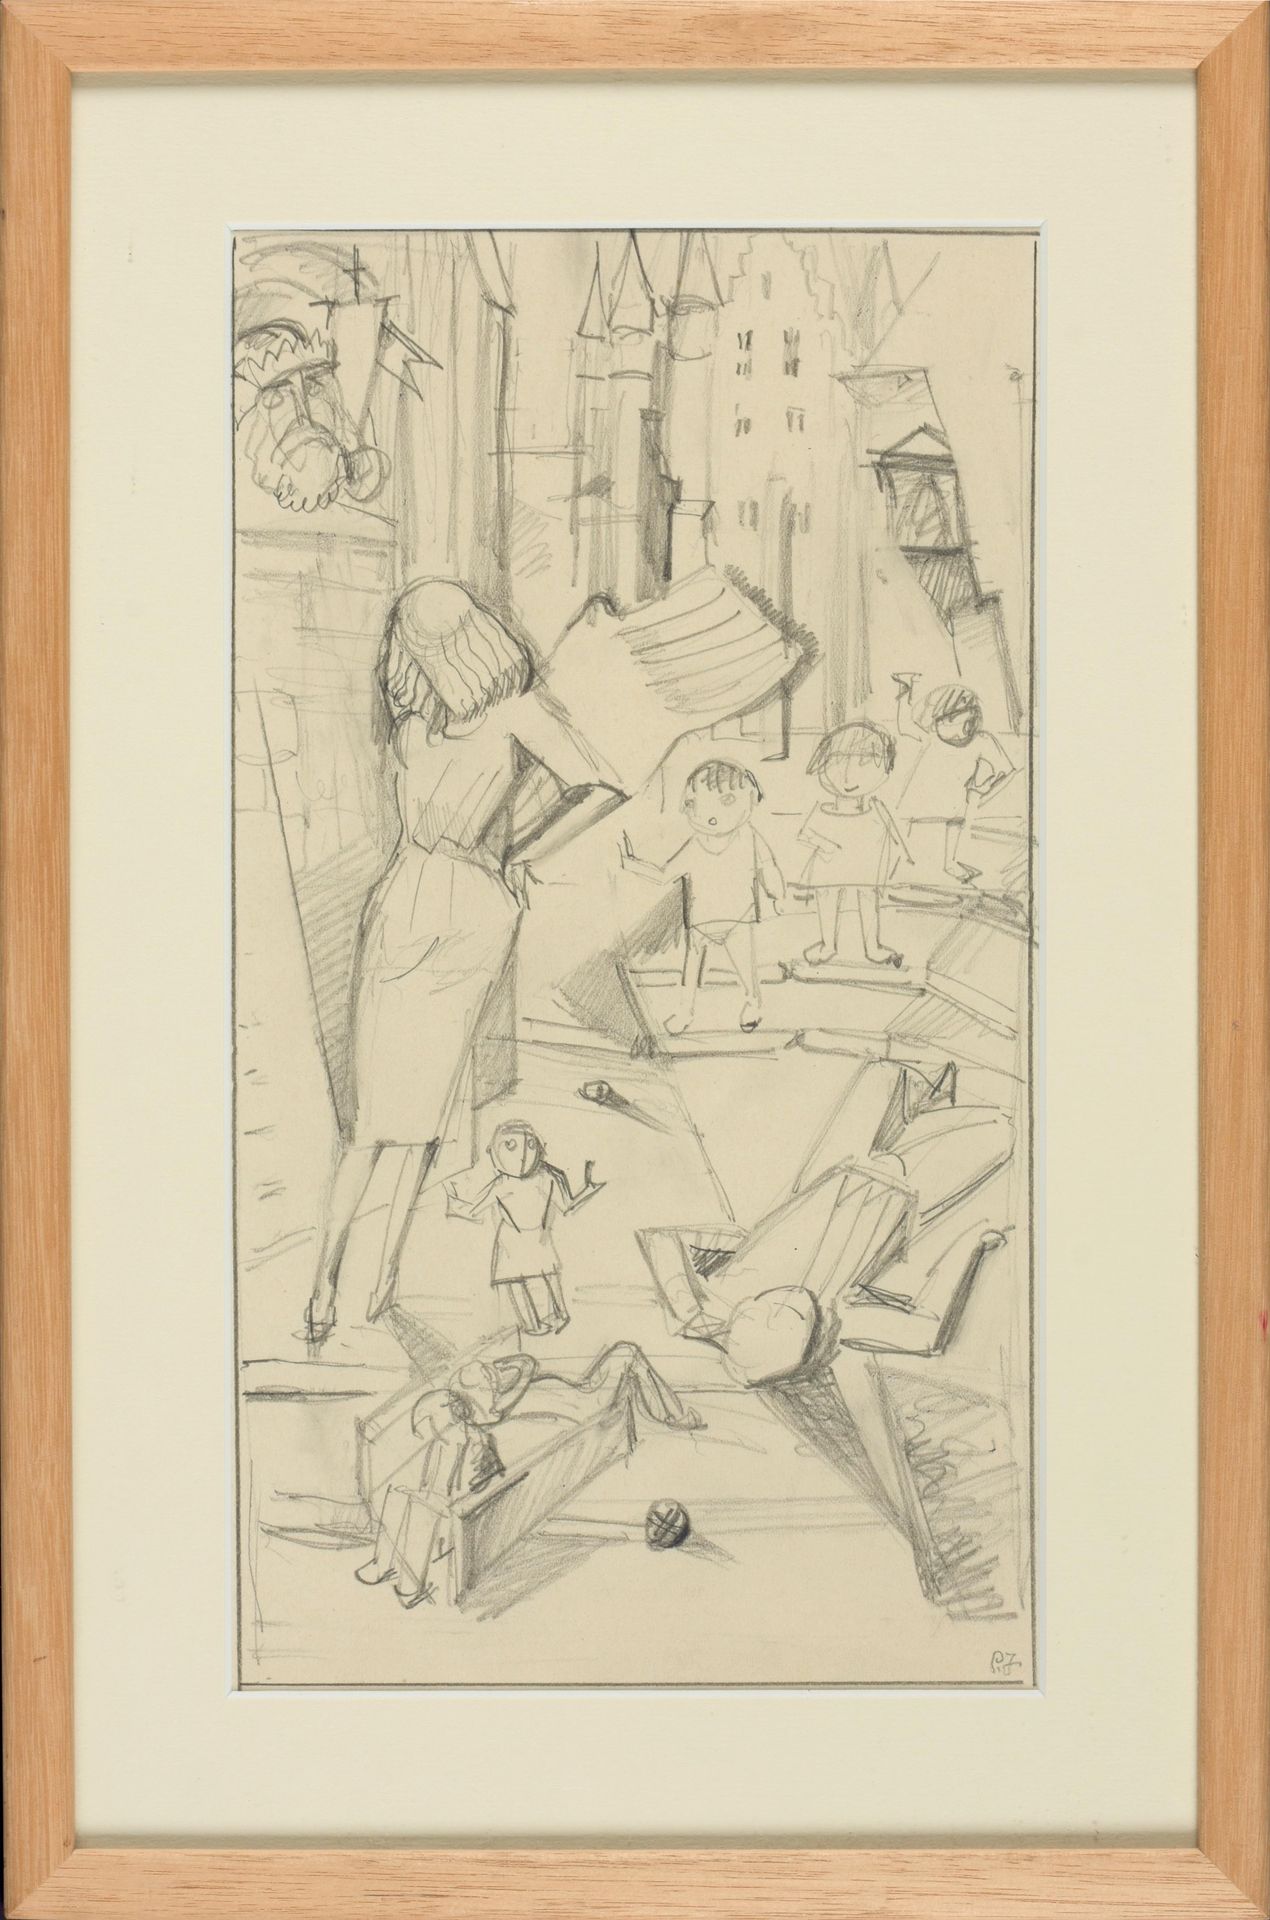 JOOSTENS, Paul (1889-1960) 在Gotische Stad中与亲属的会面

绘画(28.5 x 16 cm)，背面有一字形。英格利希特